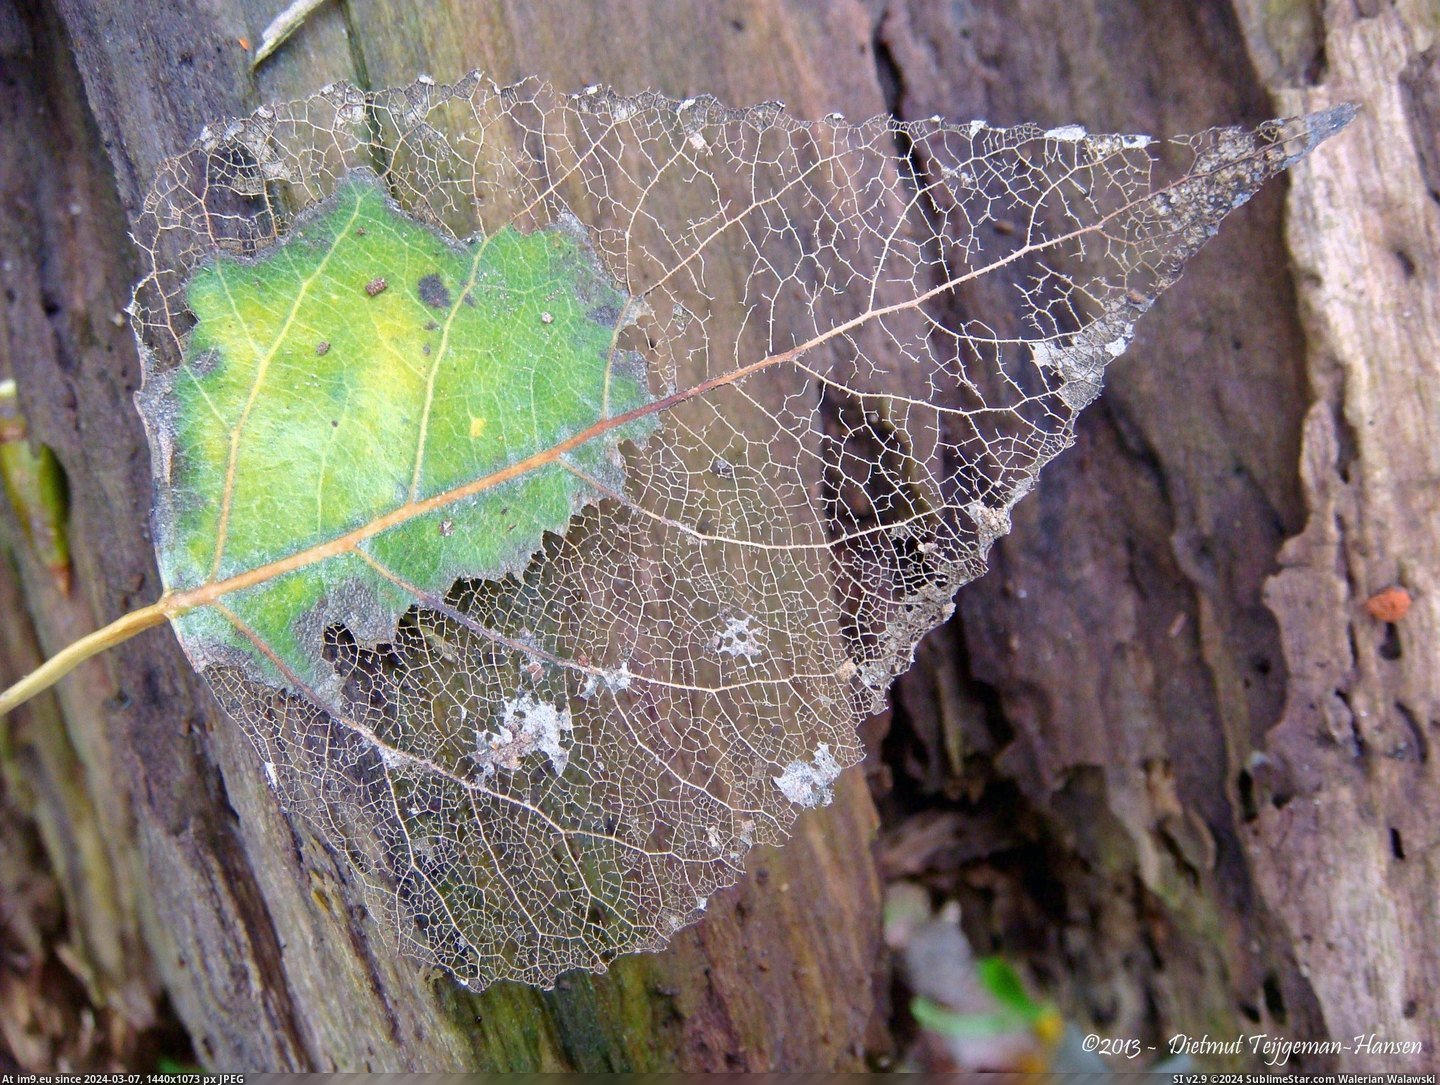 #Leaf  #Deteriorating [Pics] Deteriorating Leaf Pic. (Image of album My r/PICS favs))